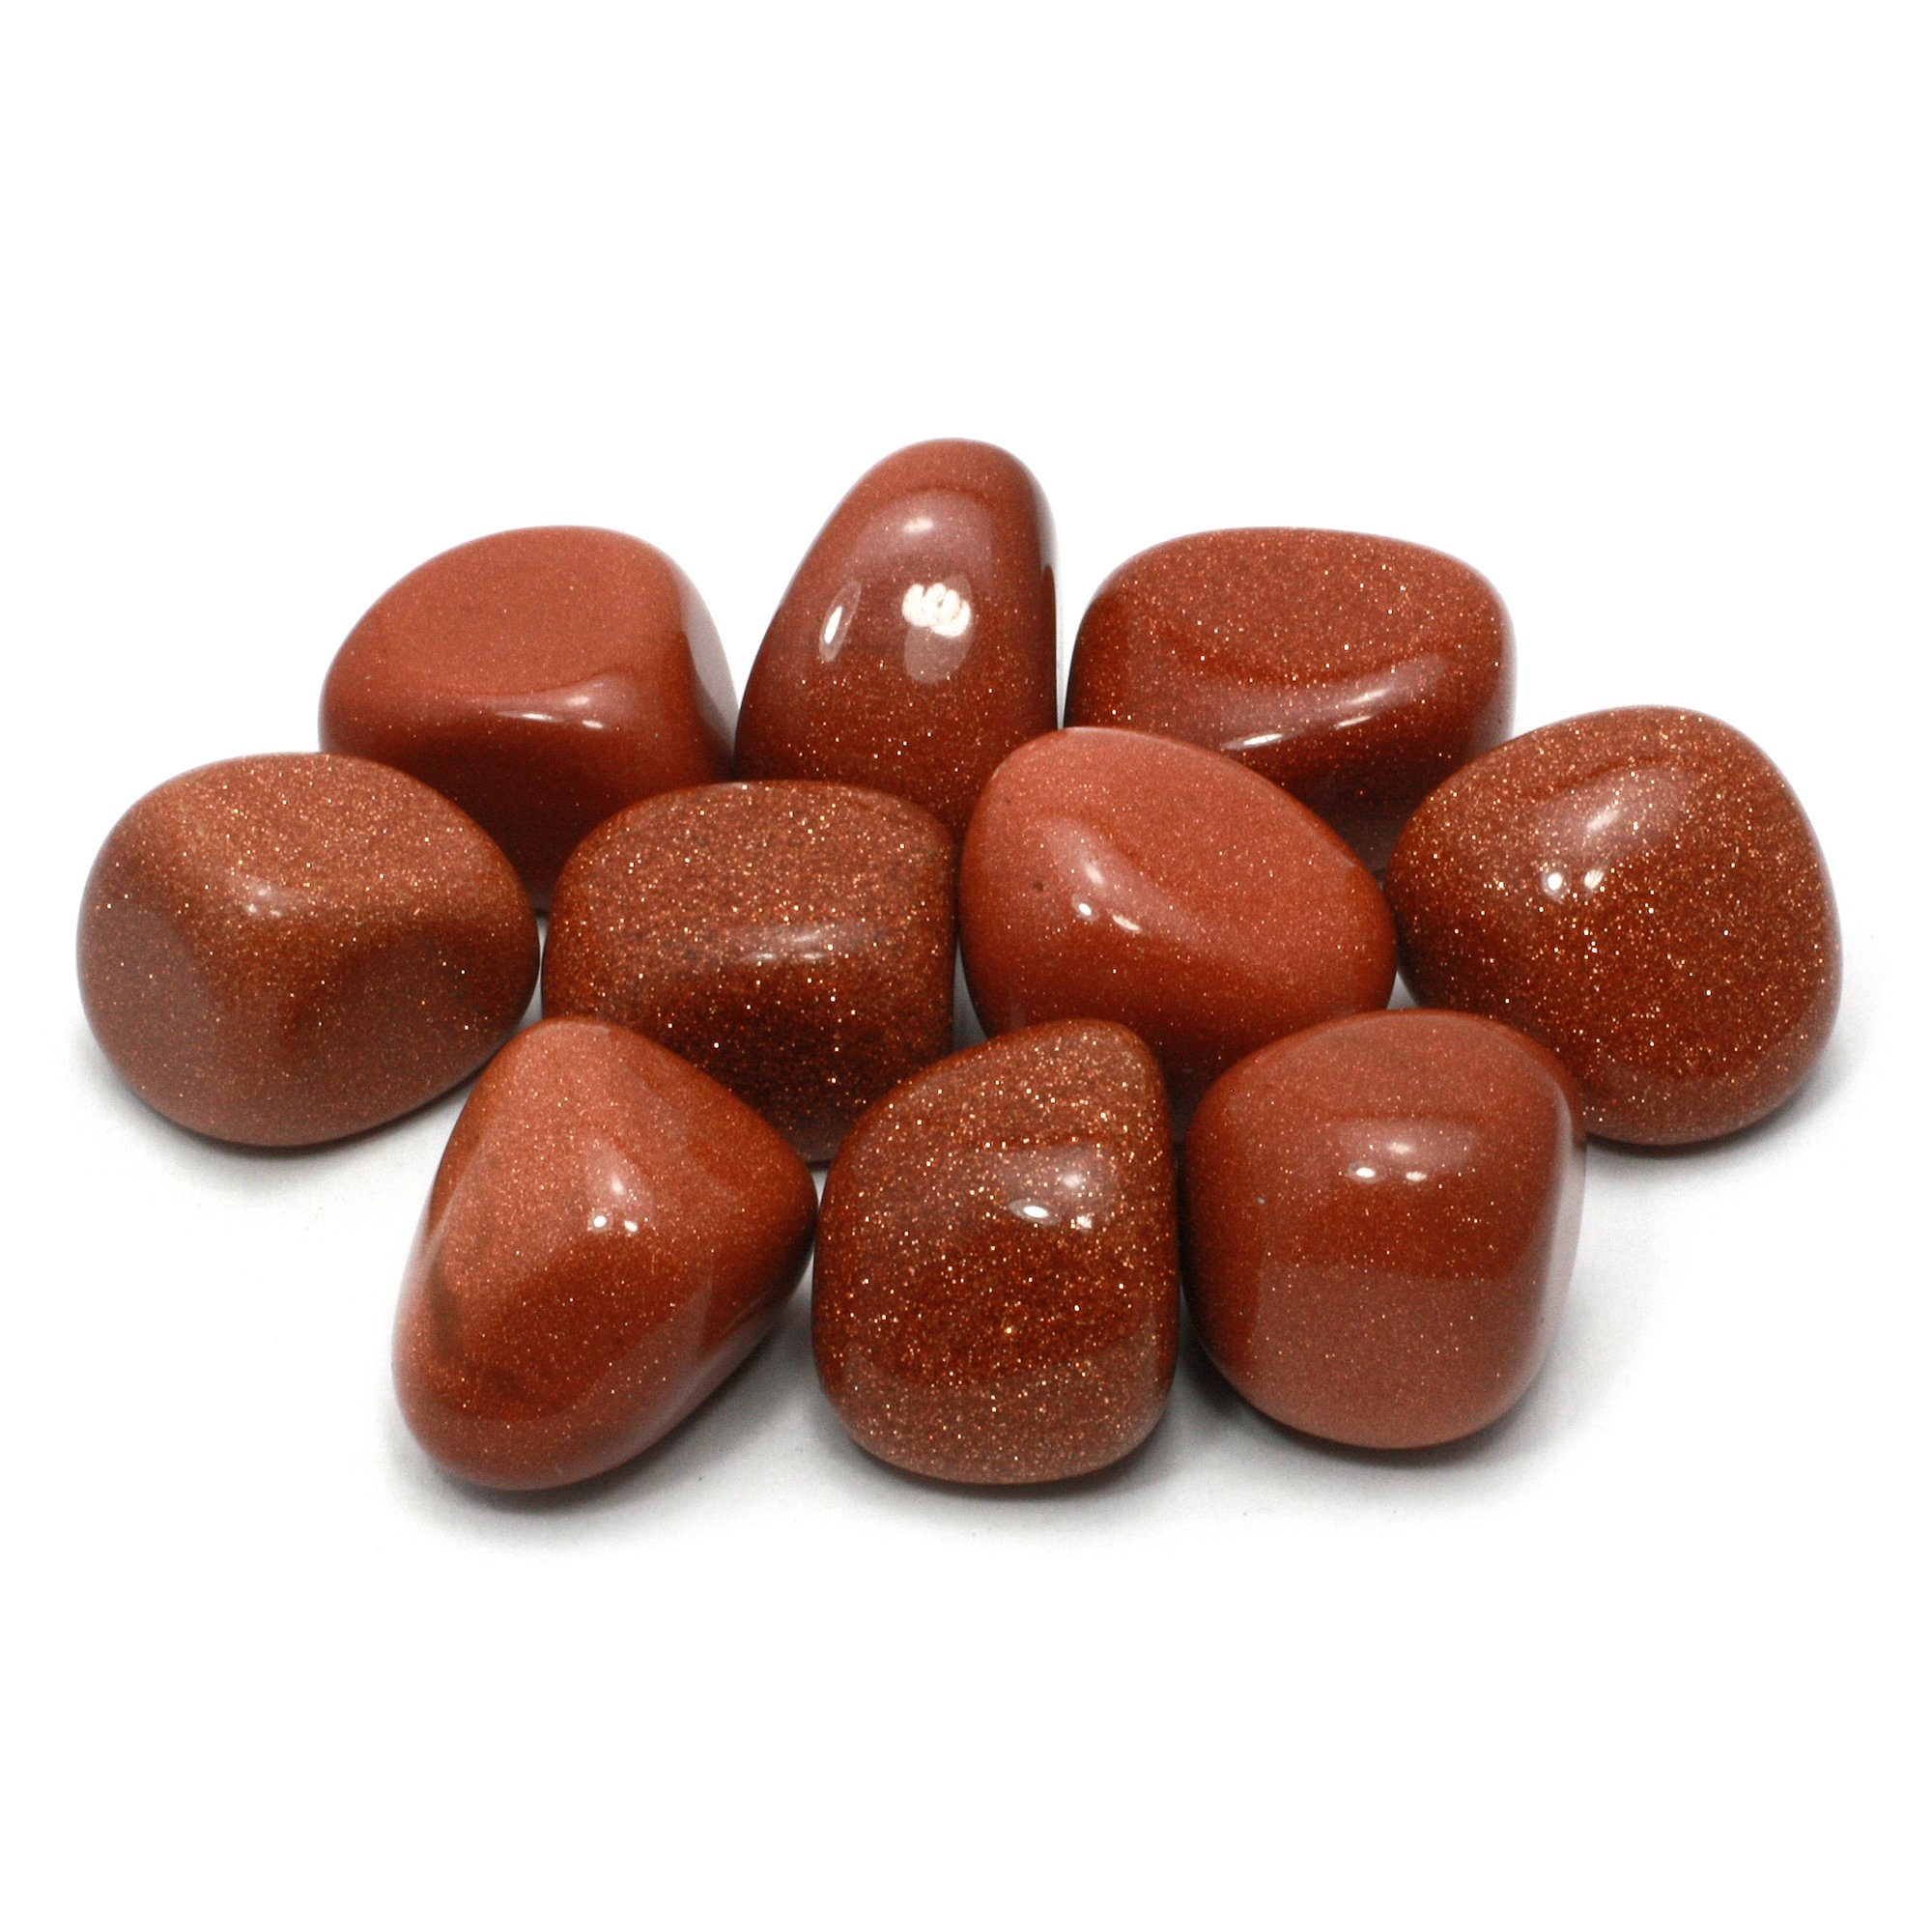 Red Goldstone Tumble Stone (20-25mm)